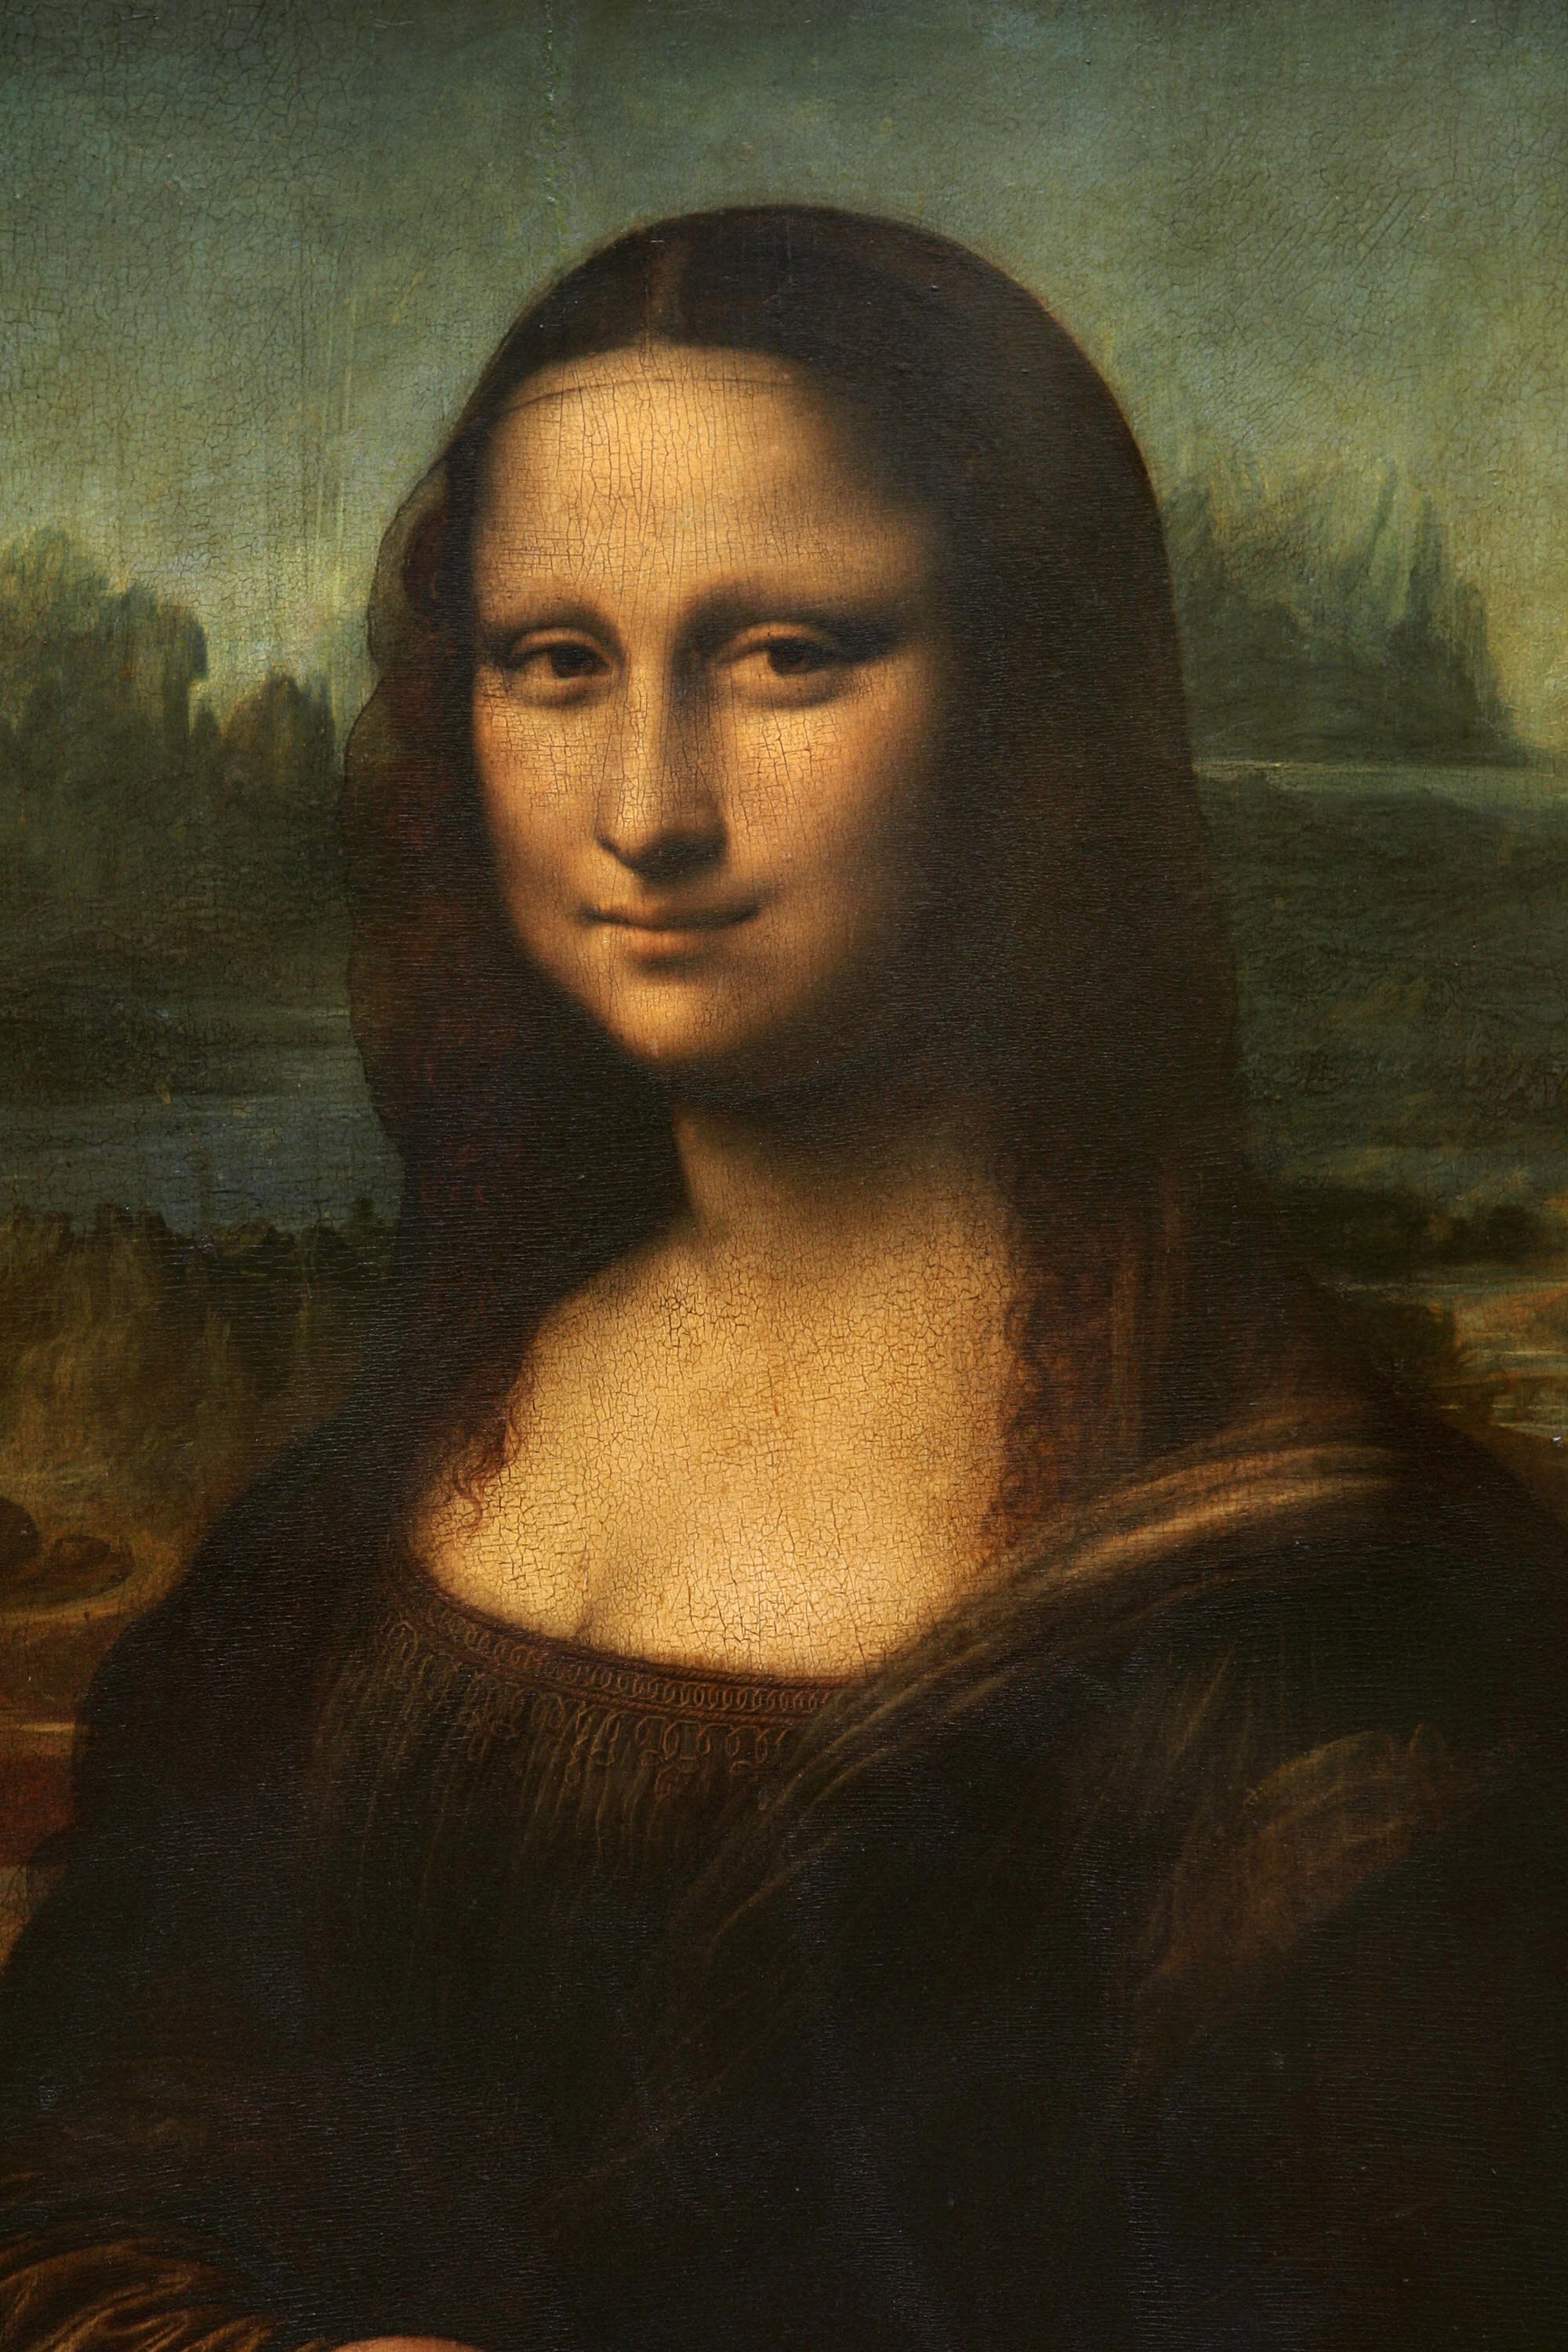 The Secret Behind Mona Lisa's Smile